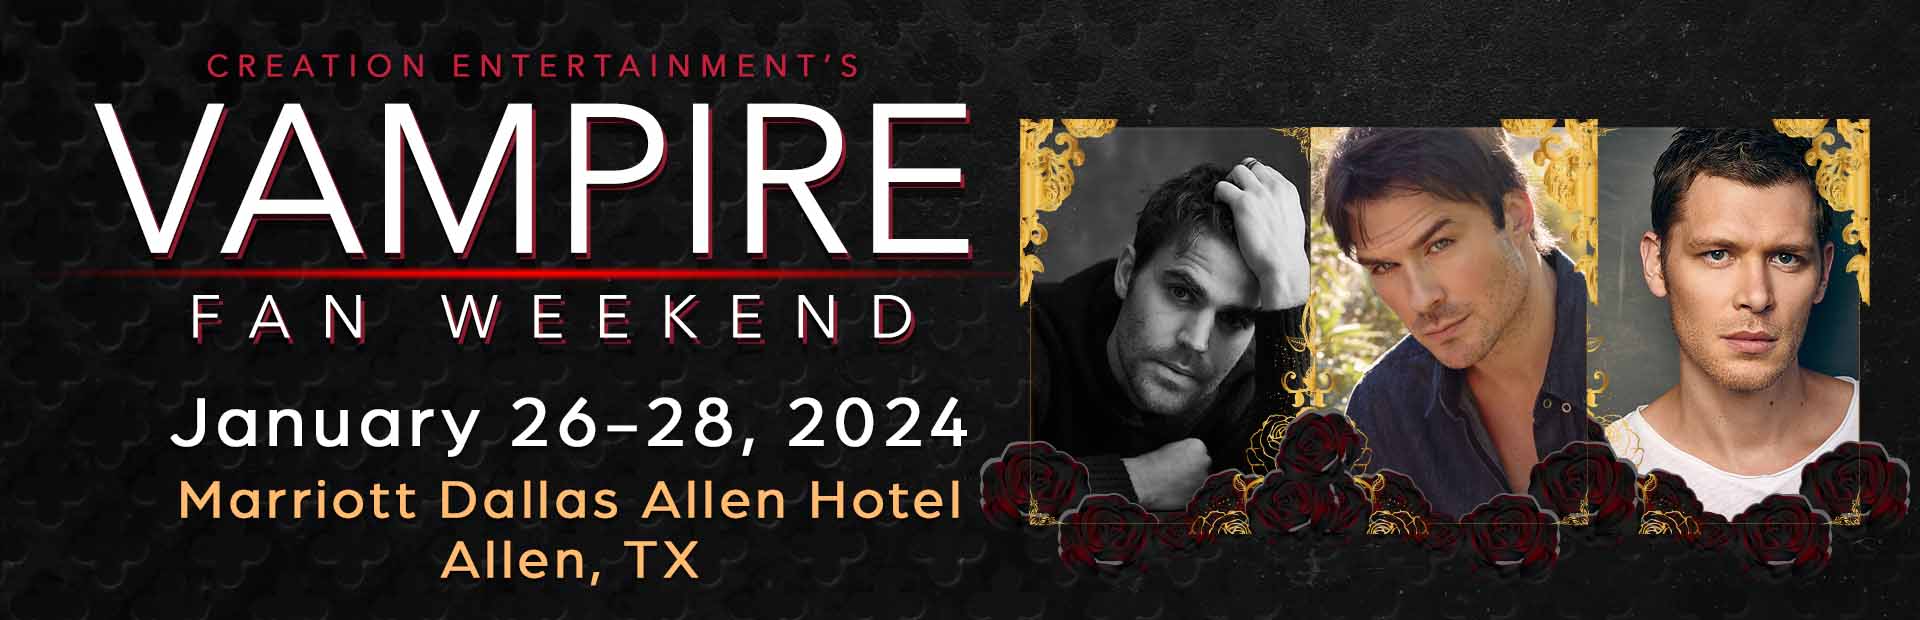 Creation Entertainment's Vampire Fan Weekend Convention Dallas/Allen, TX